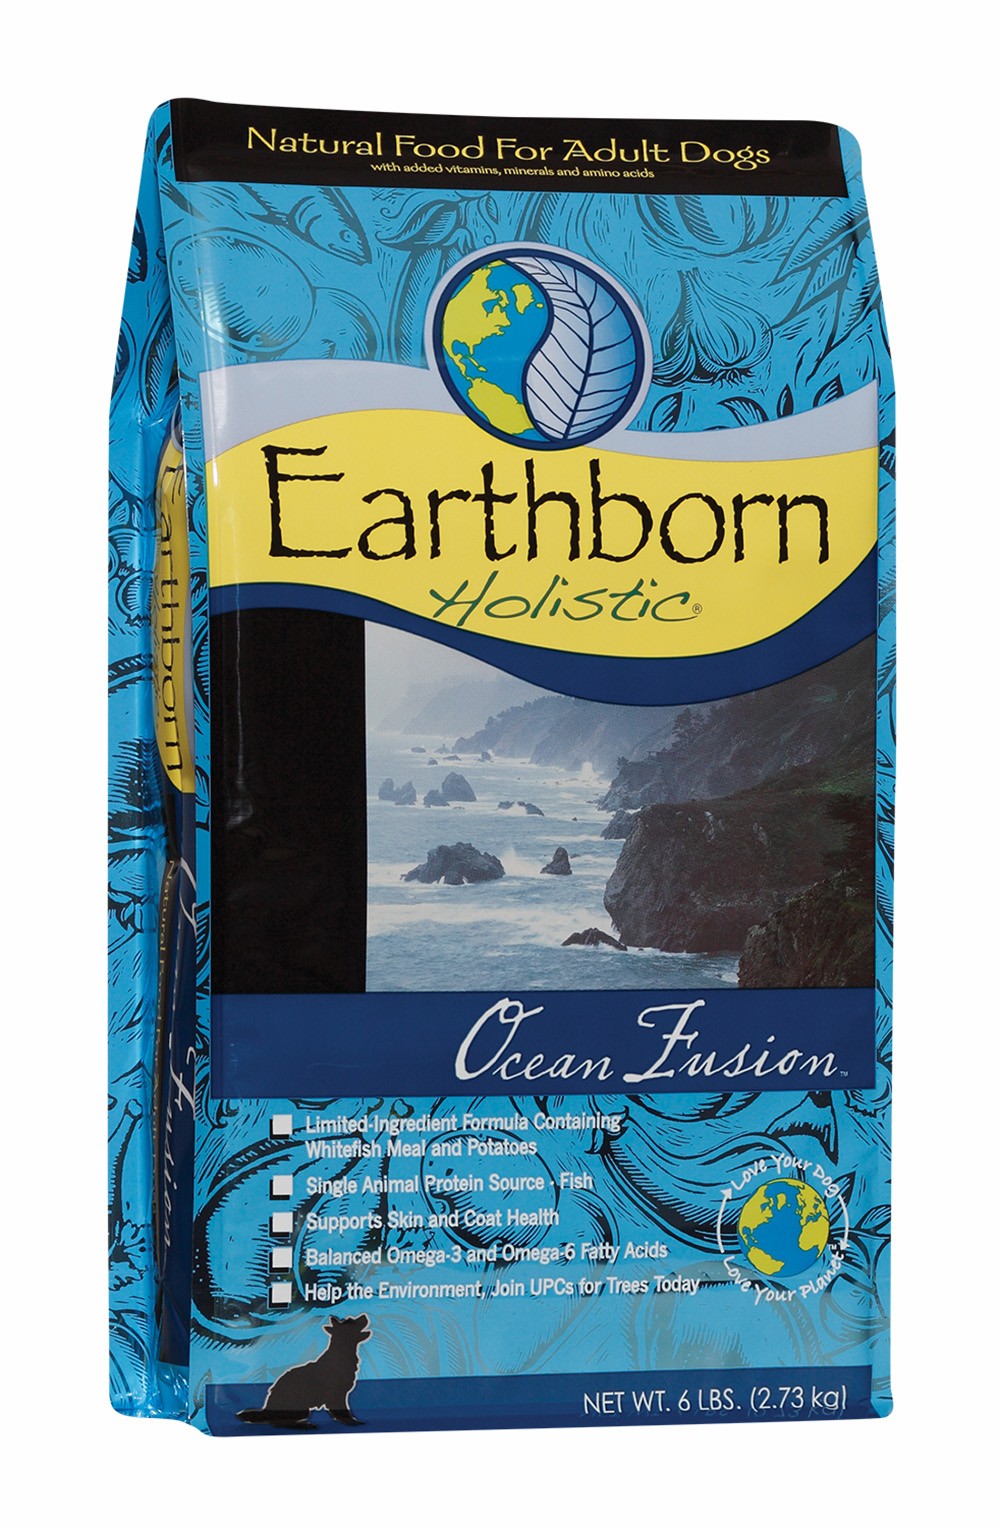 Earthborn Holistic Ocean Fusion Natural Dog Food 4 lb.